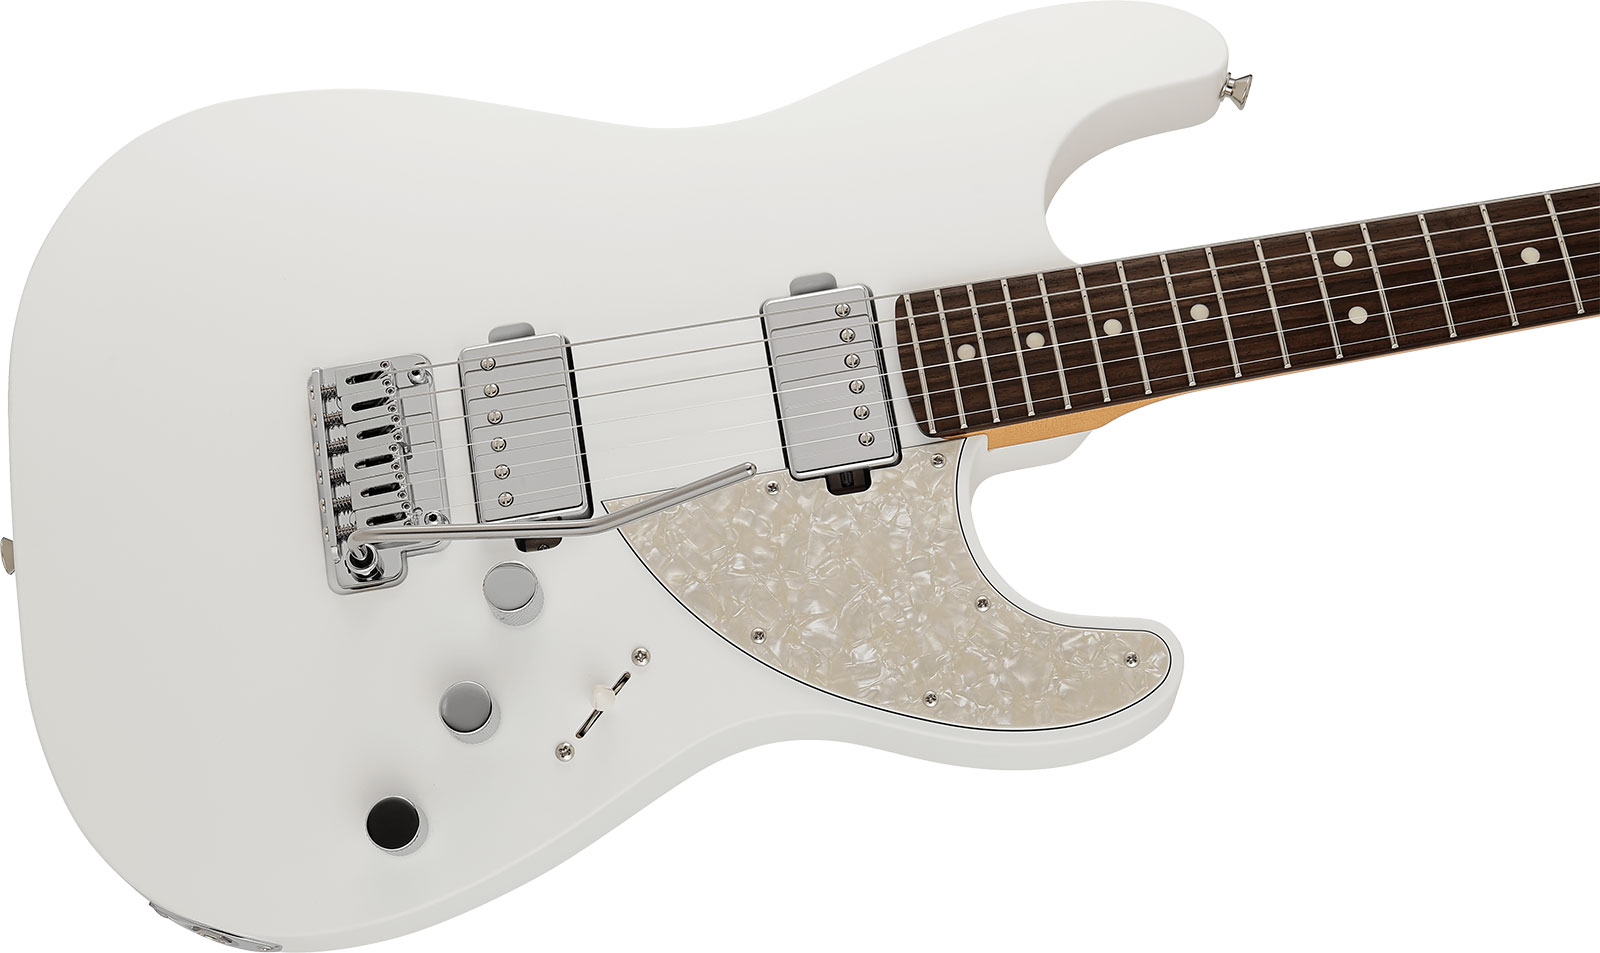 Fender Strat Elemental Mij Jap 2h Trem Rw - Nimbus White - Str shape electric guitar - Variation 2